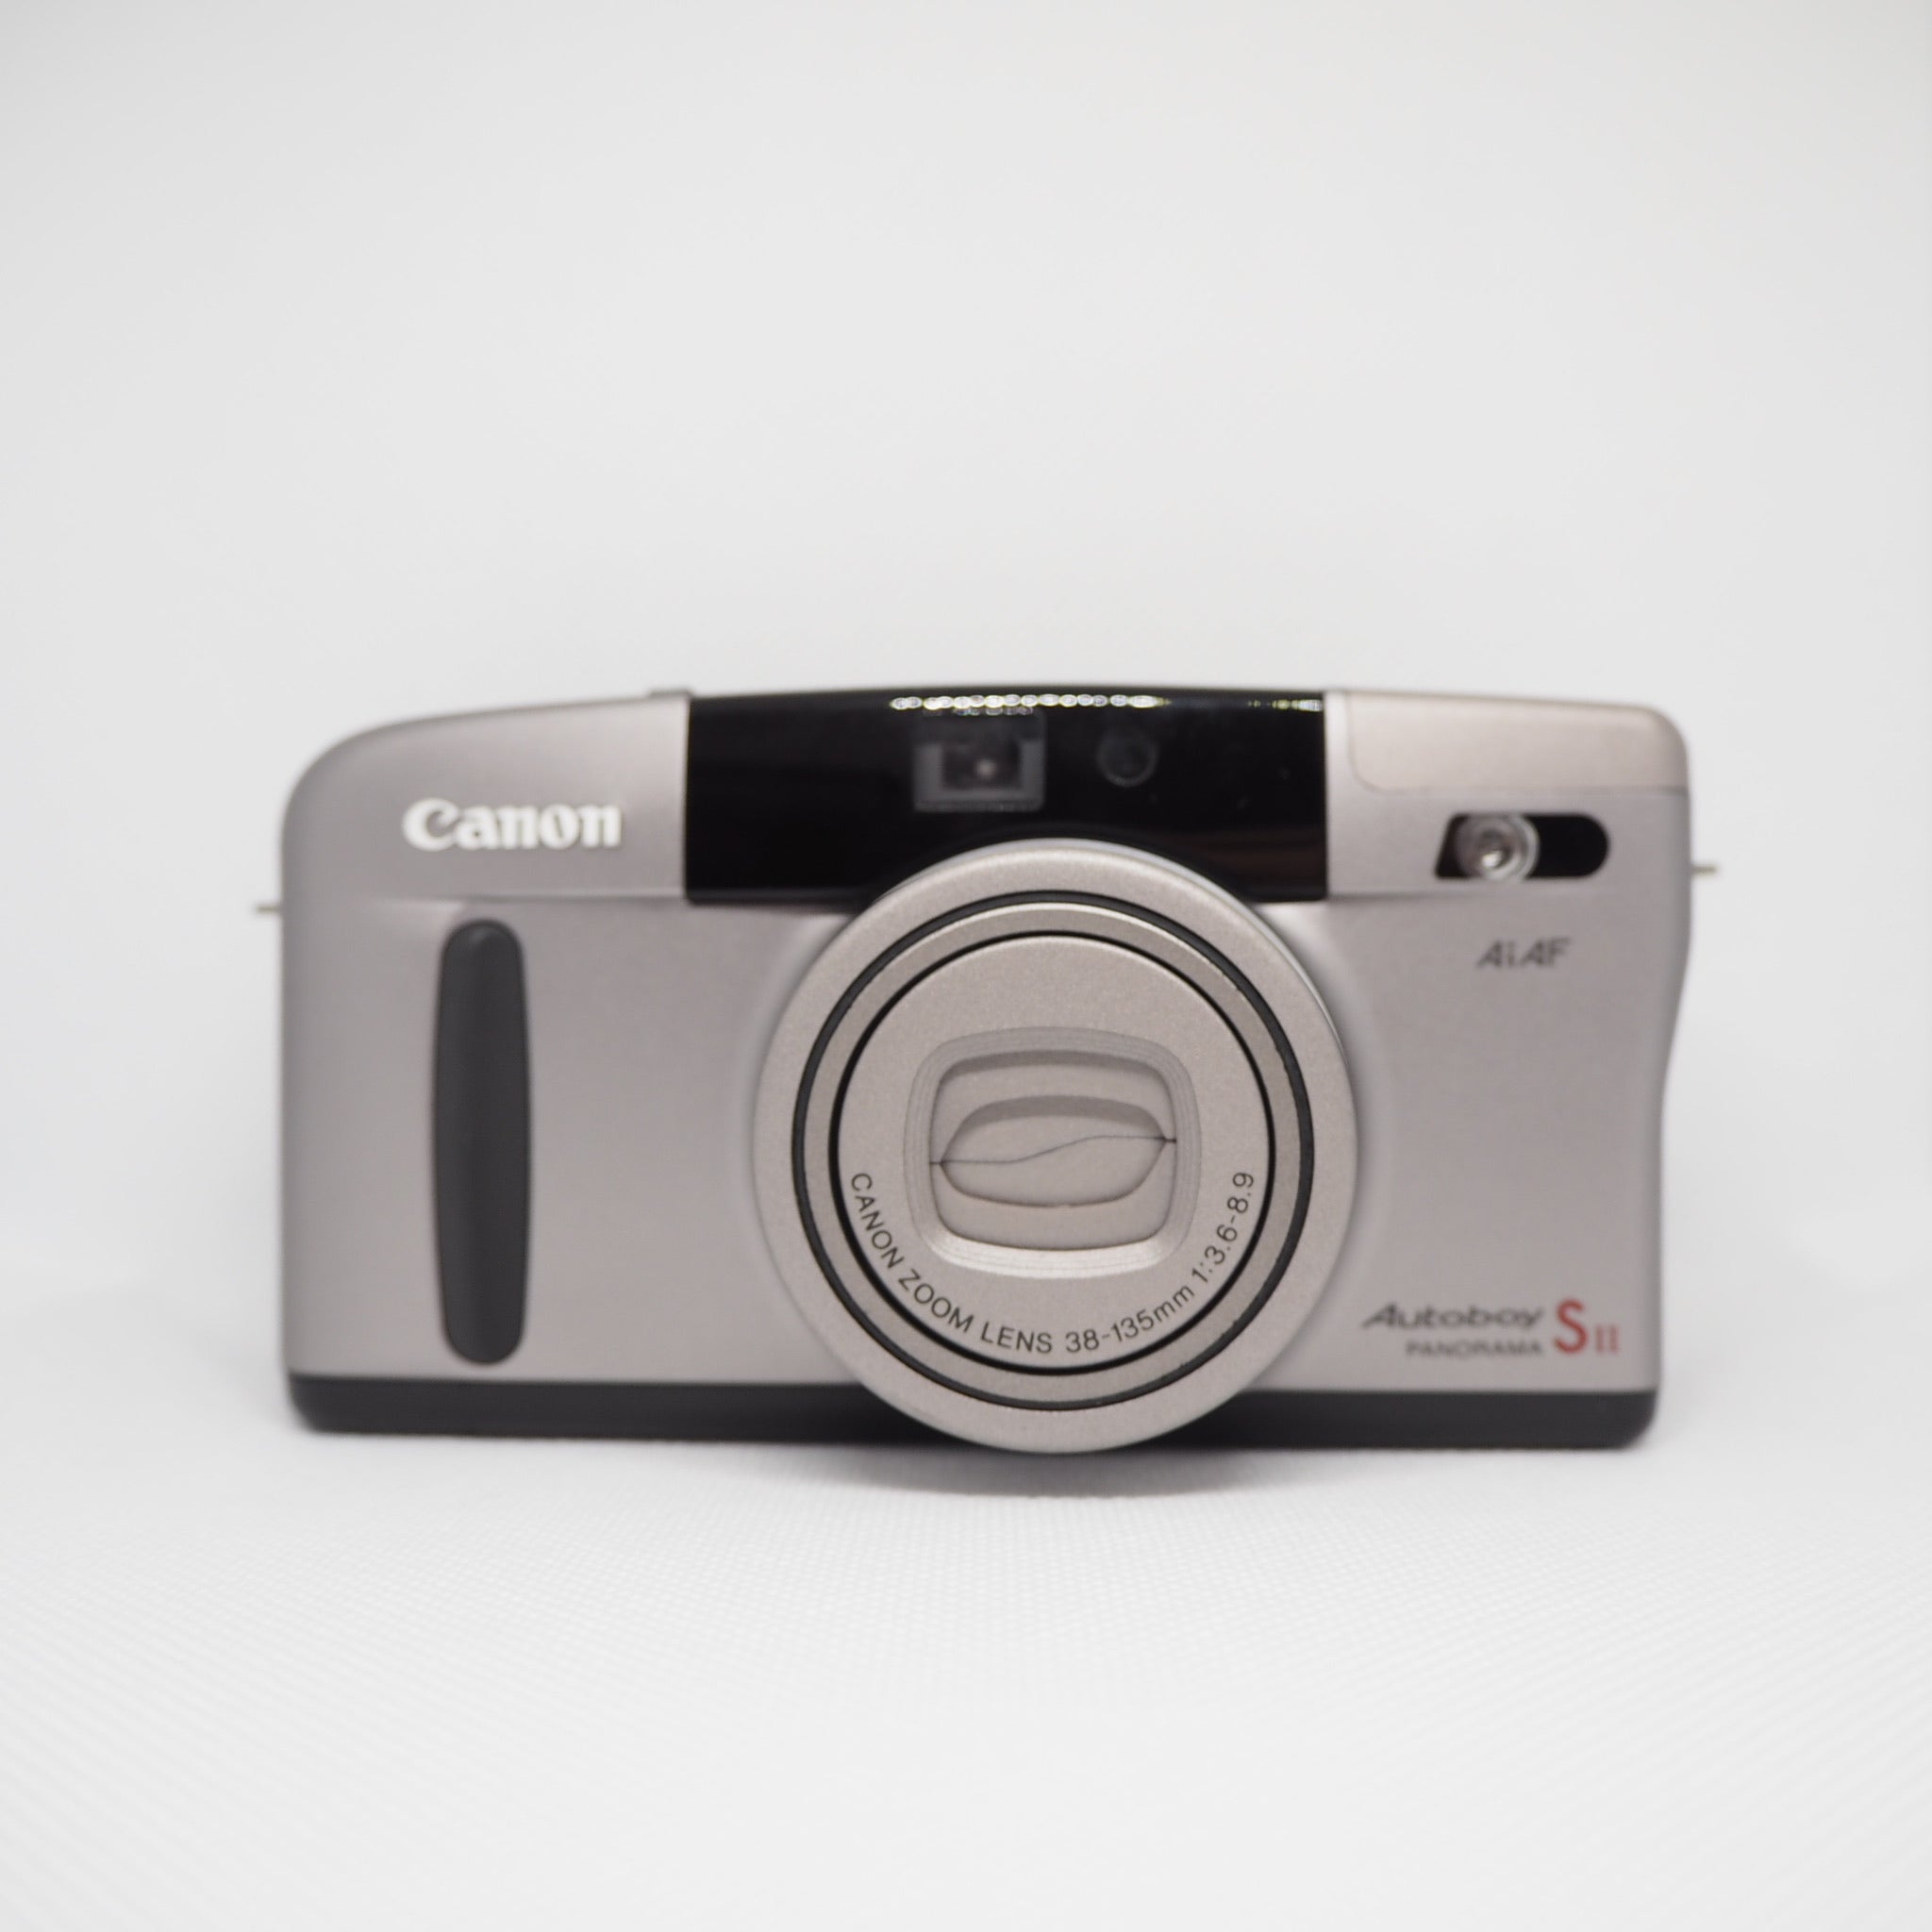 Canon Autoboy S II Panorama